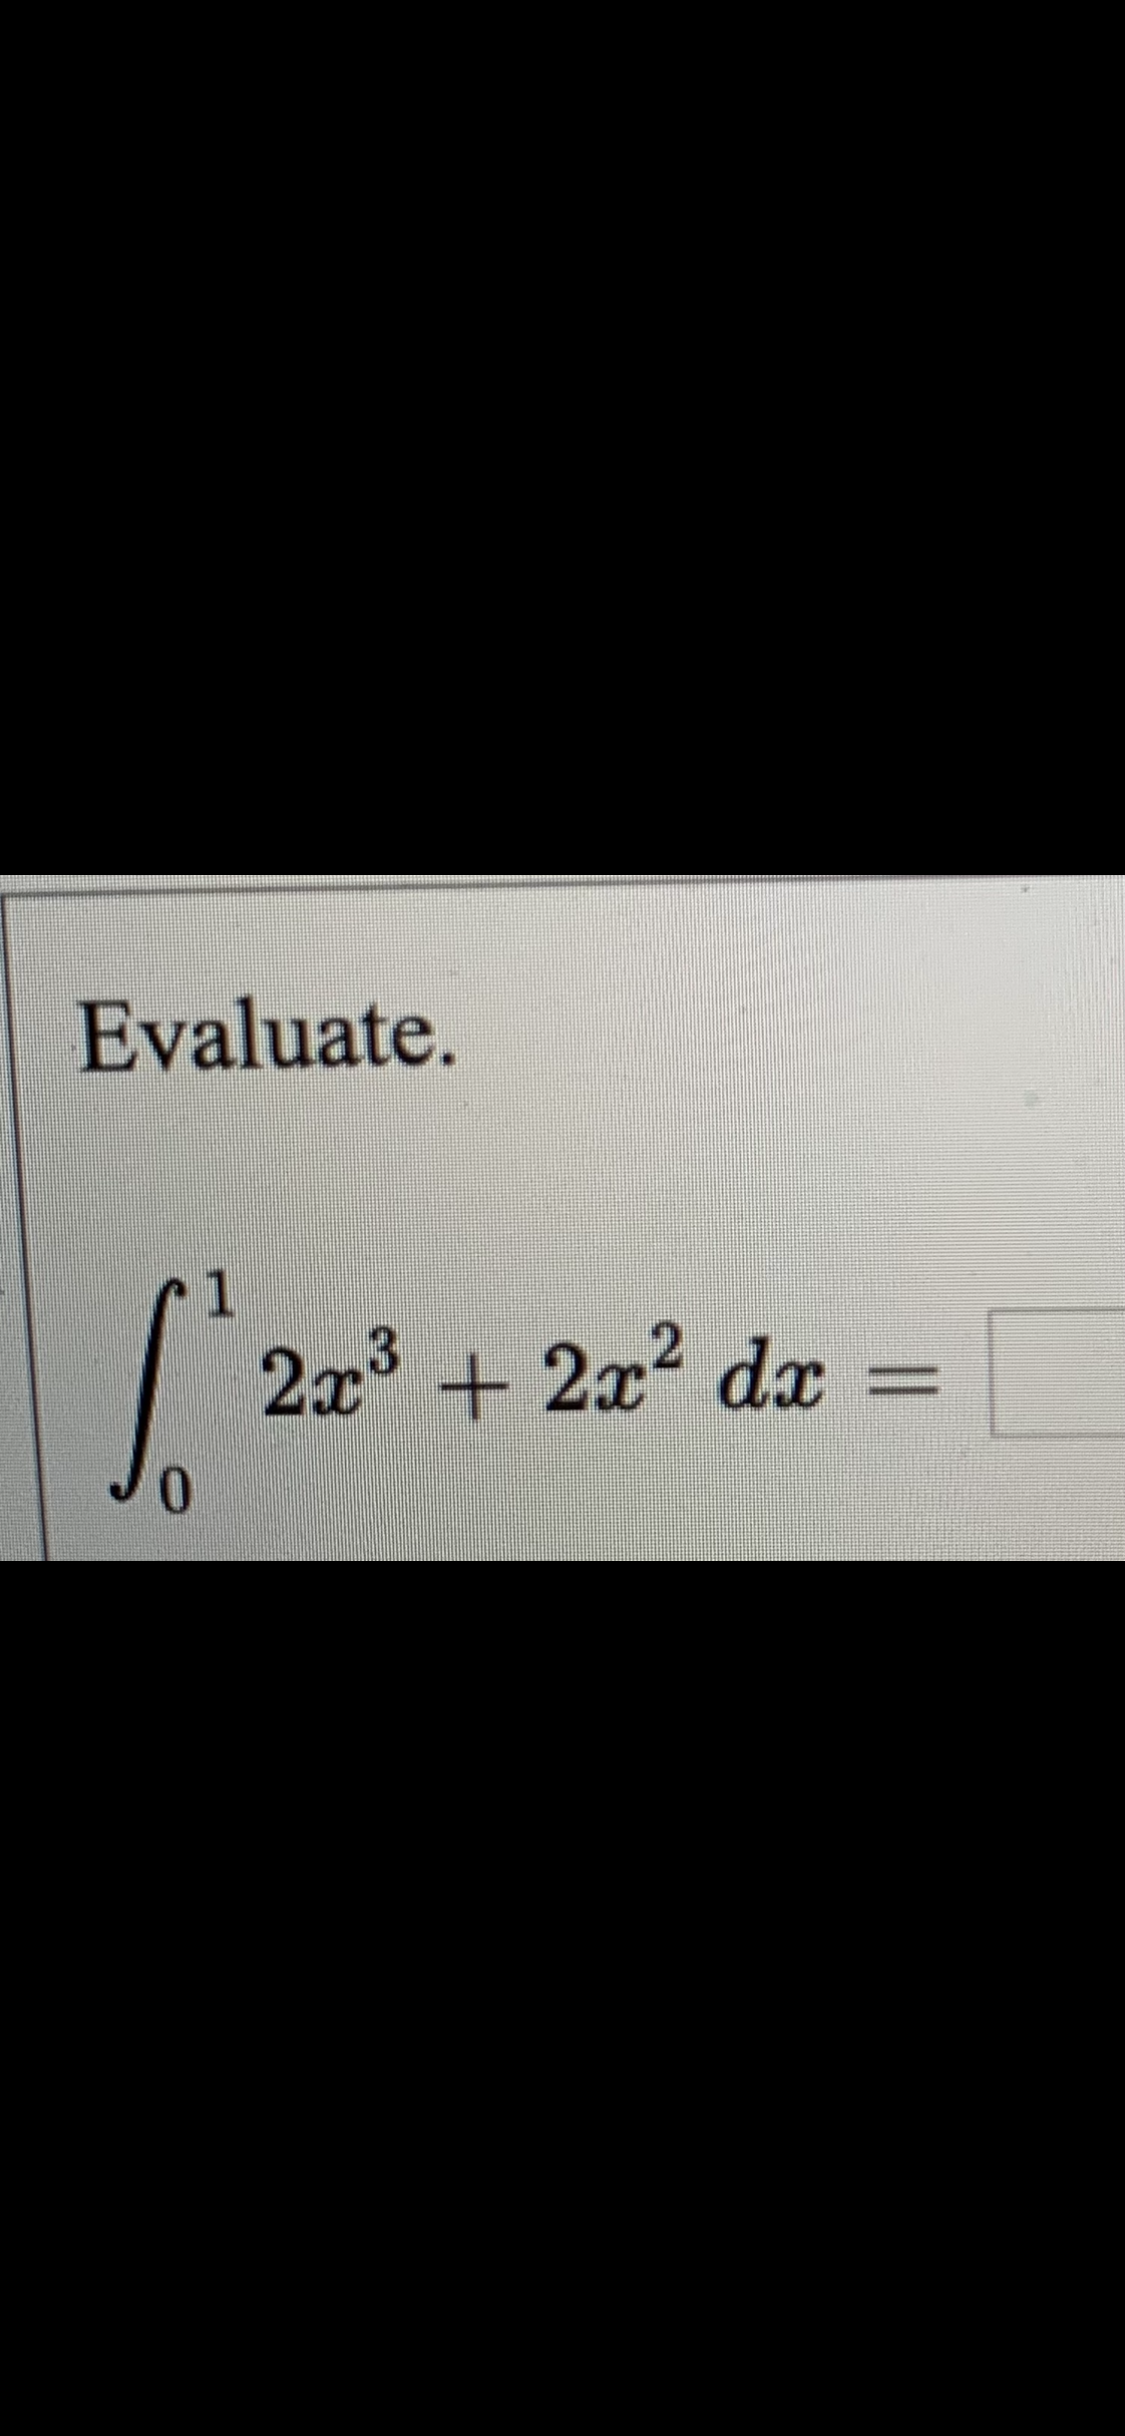 Evaluate.
1
3.
2x + 2x2 dx
0.
